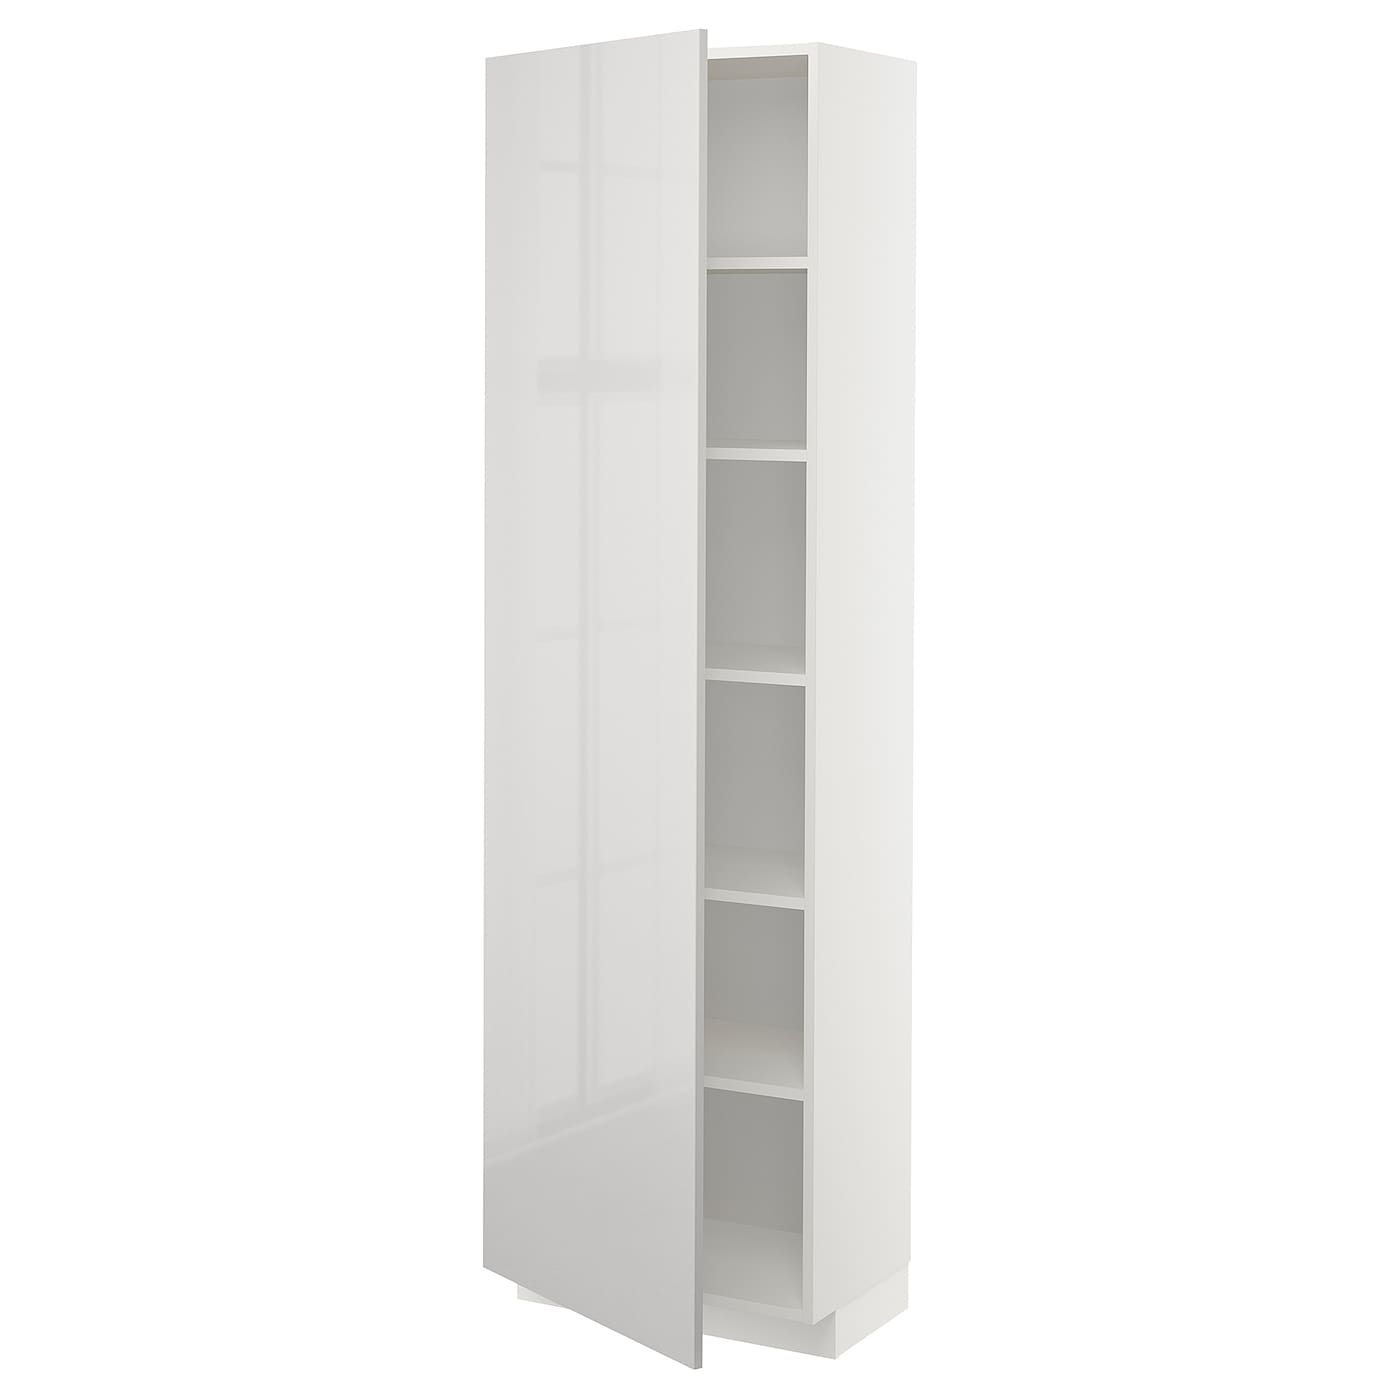 Высокий кухонный шкаф с полками - IKEA METOD/МЕТОД ИКЕА, 200х37х60 см, белый/светло-серый глянцевый